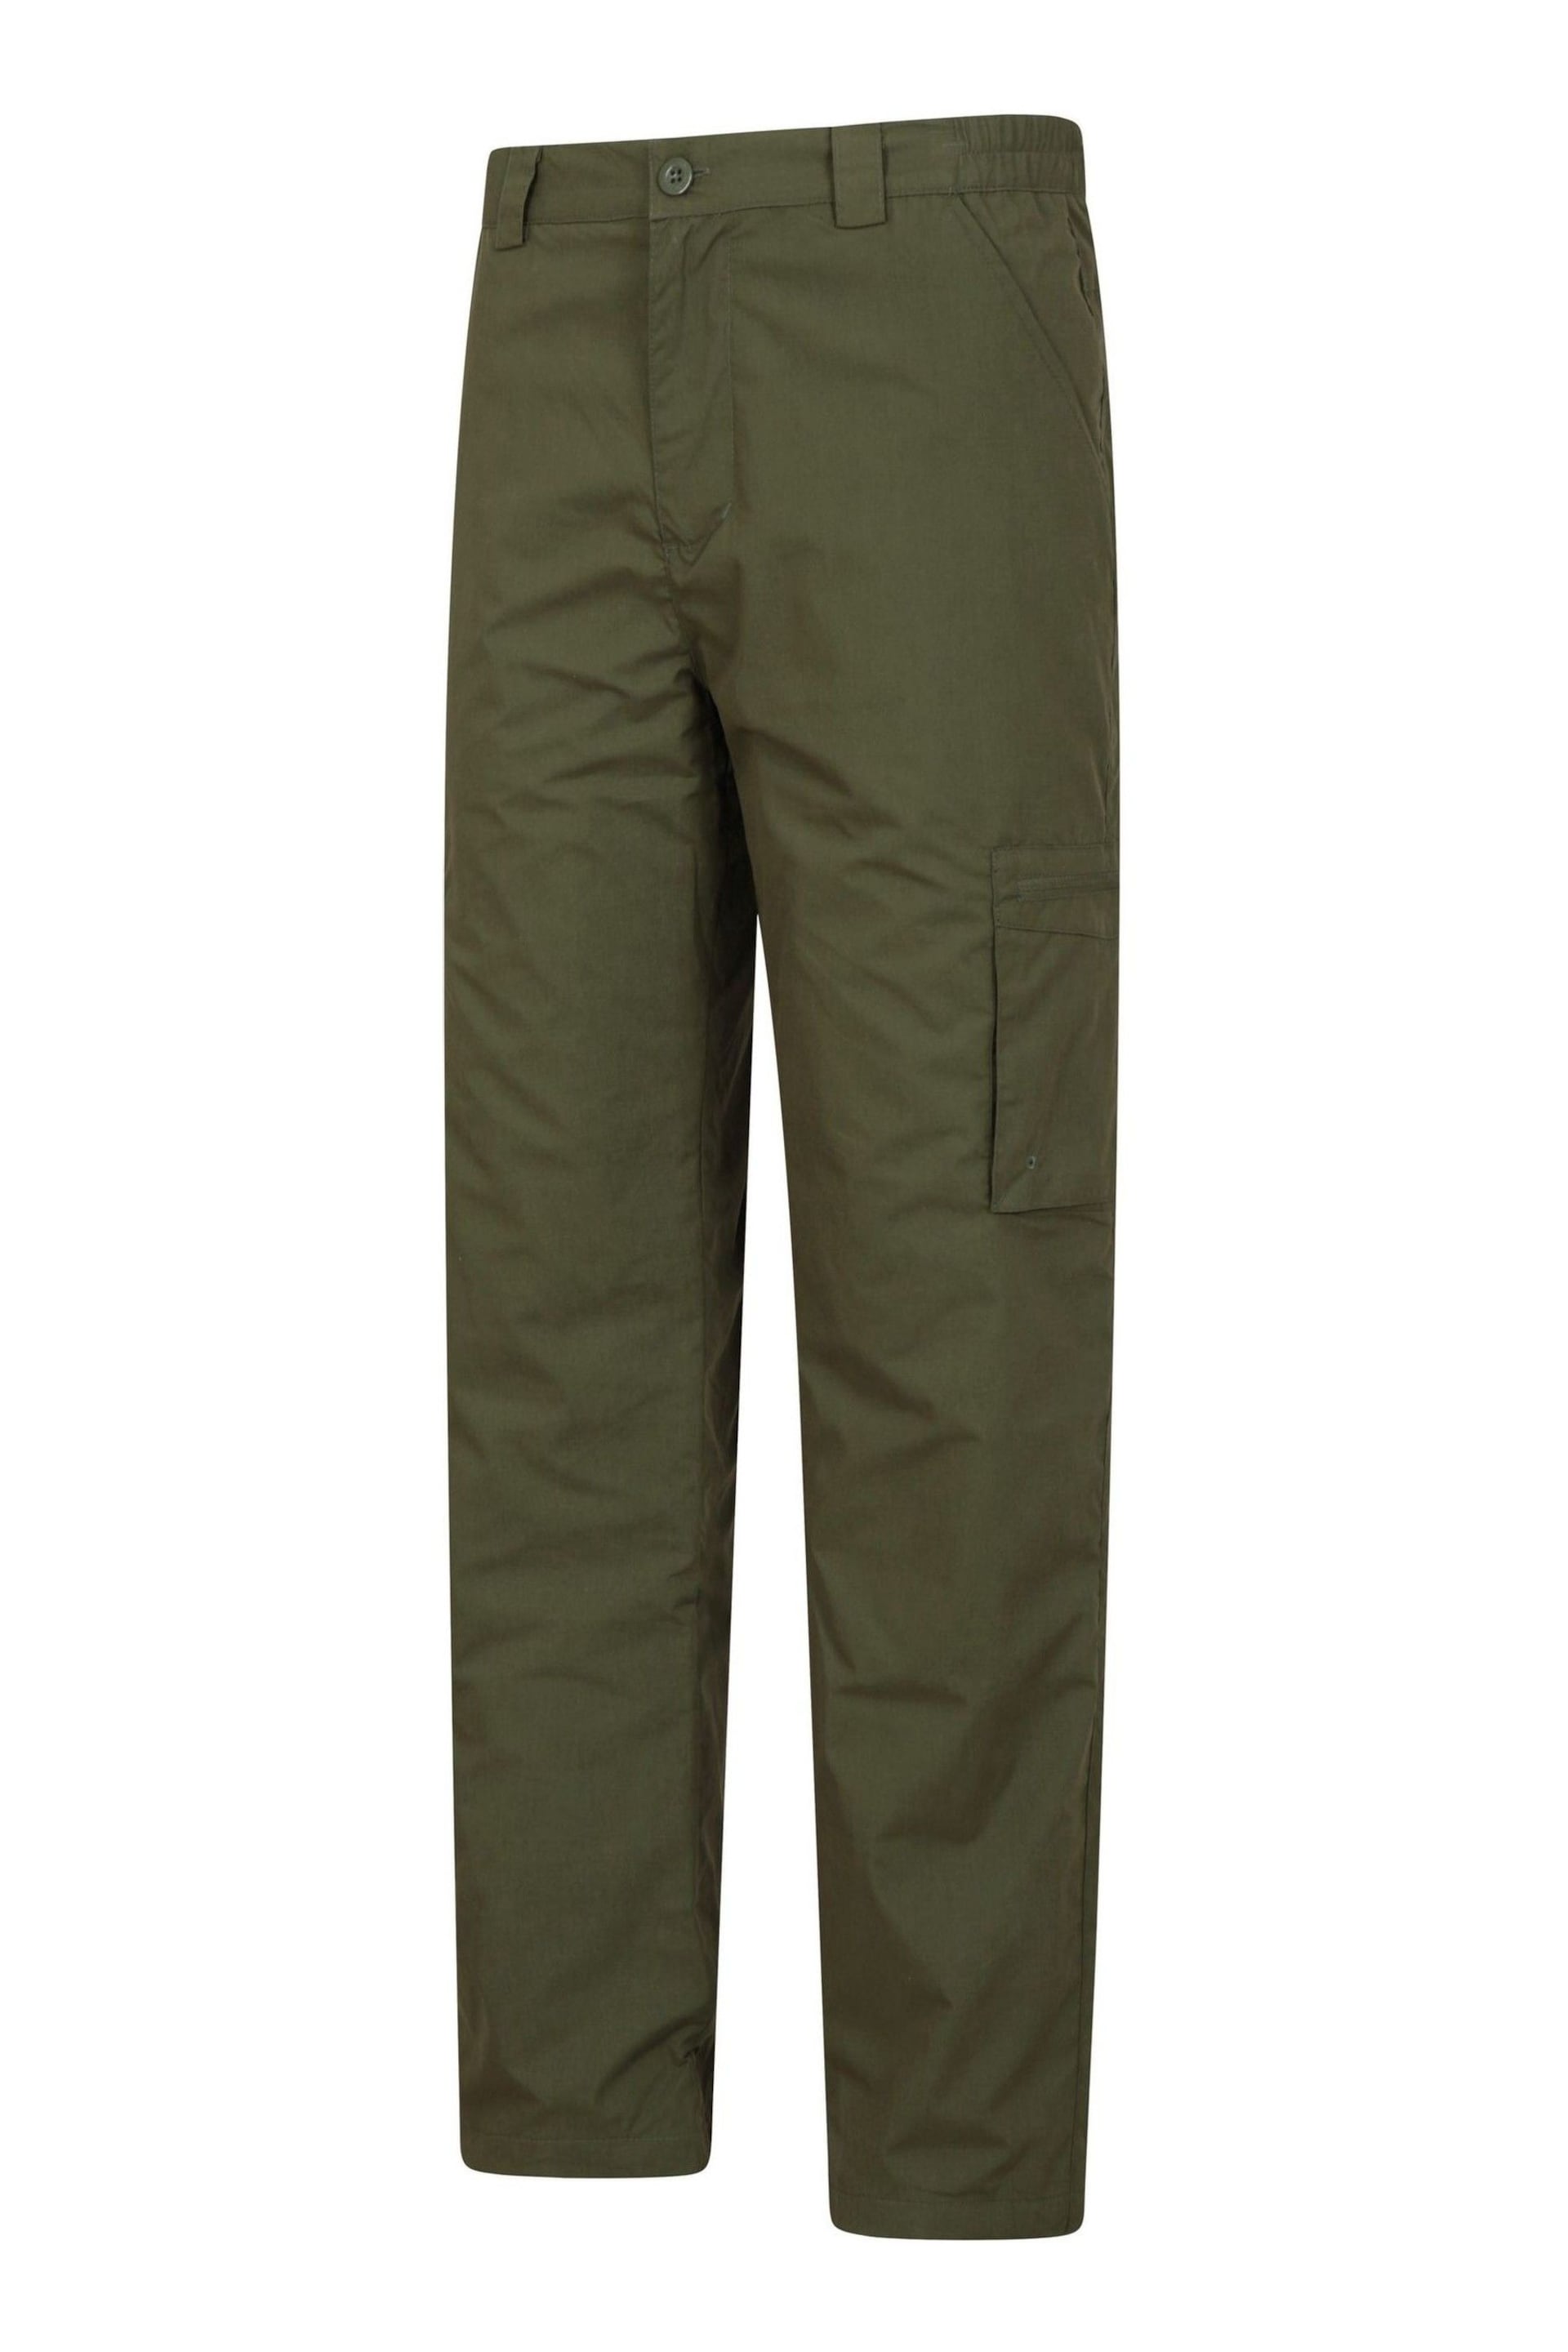 Mountain Warehouse Green Mens Winter Trek II Short Length Trousers - Image 3 of 5